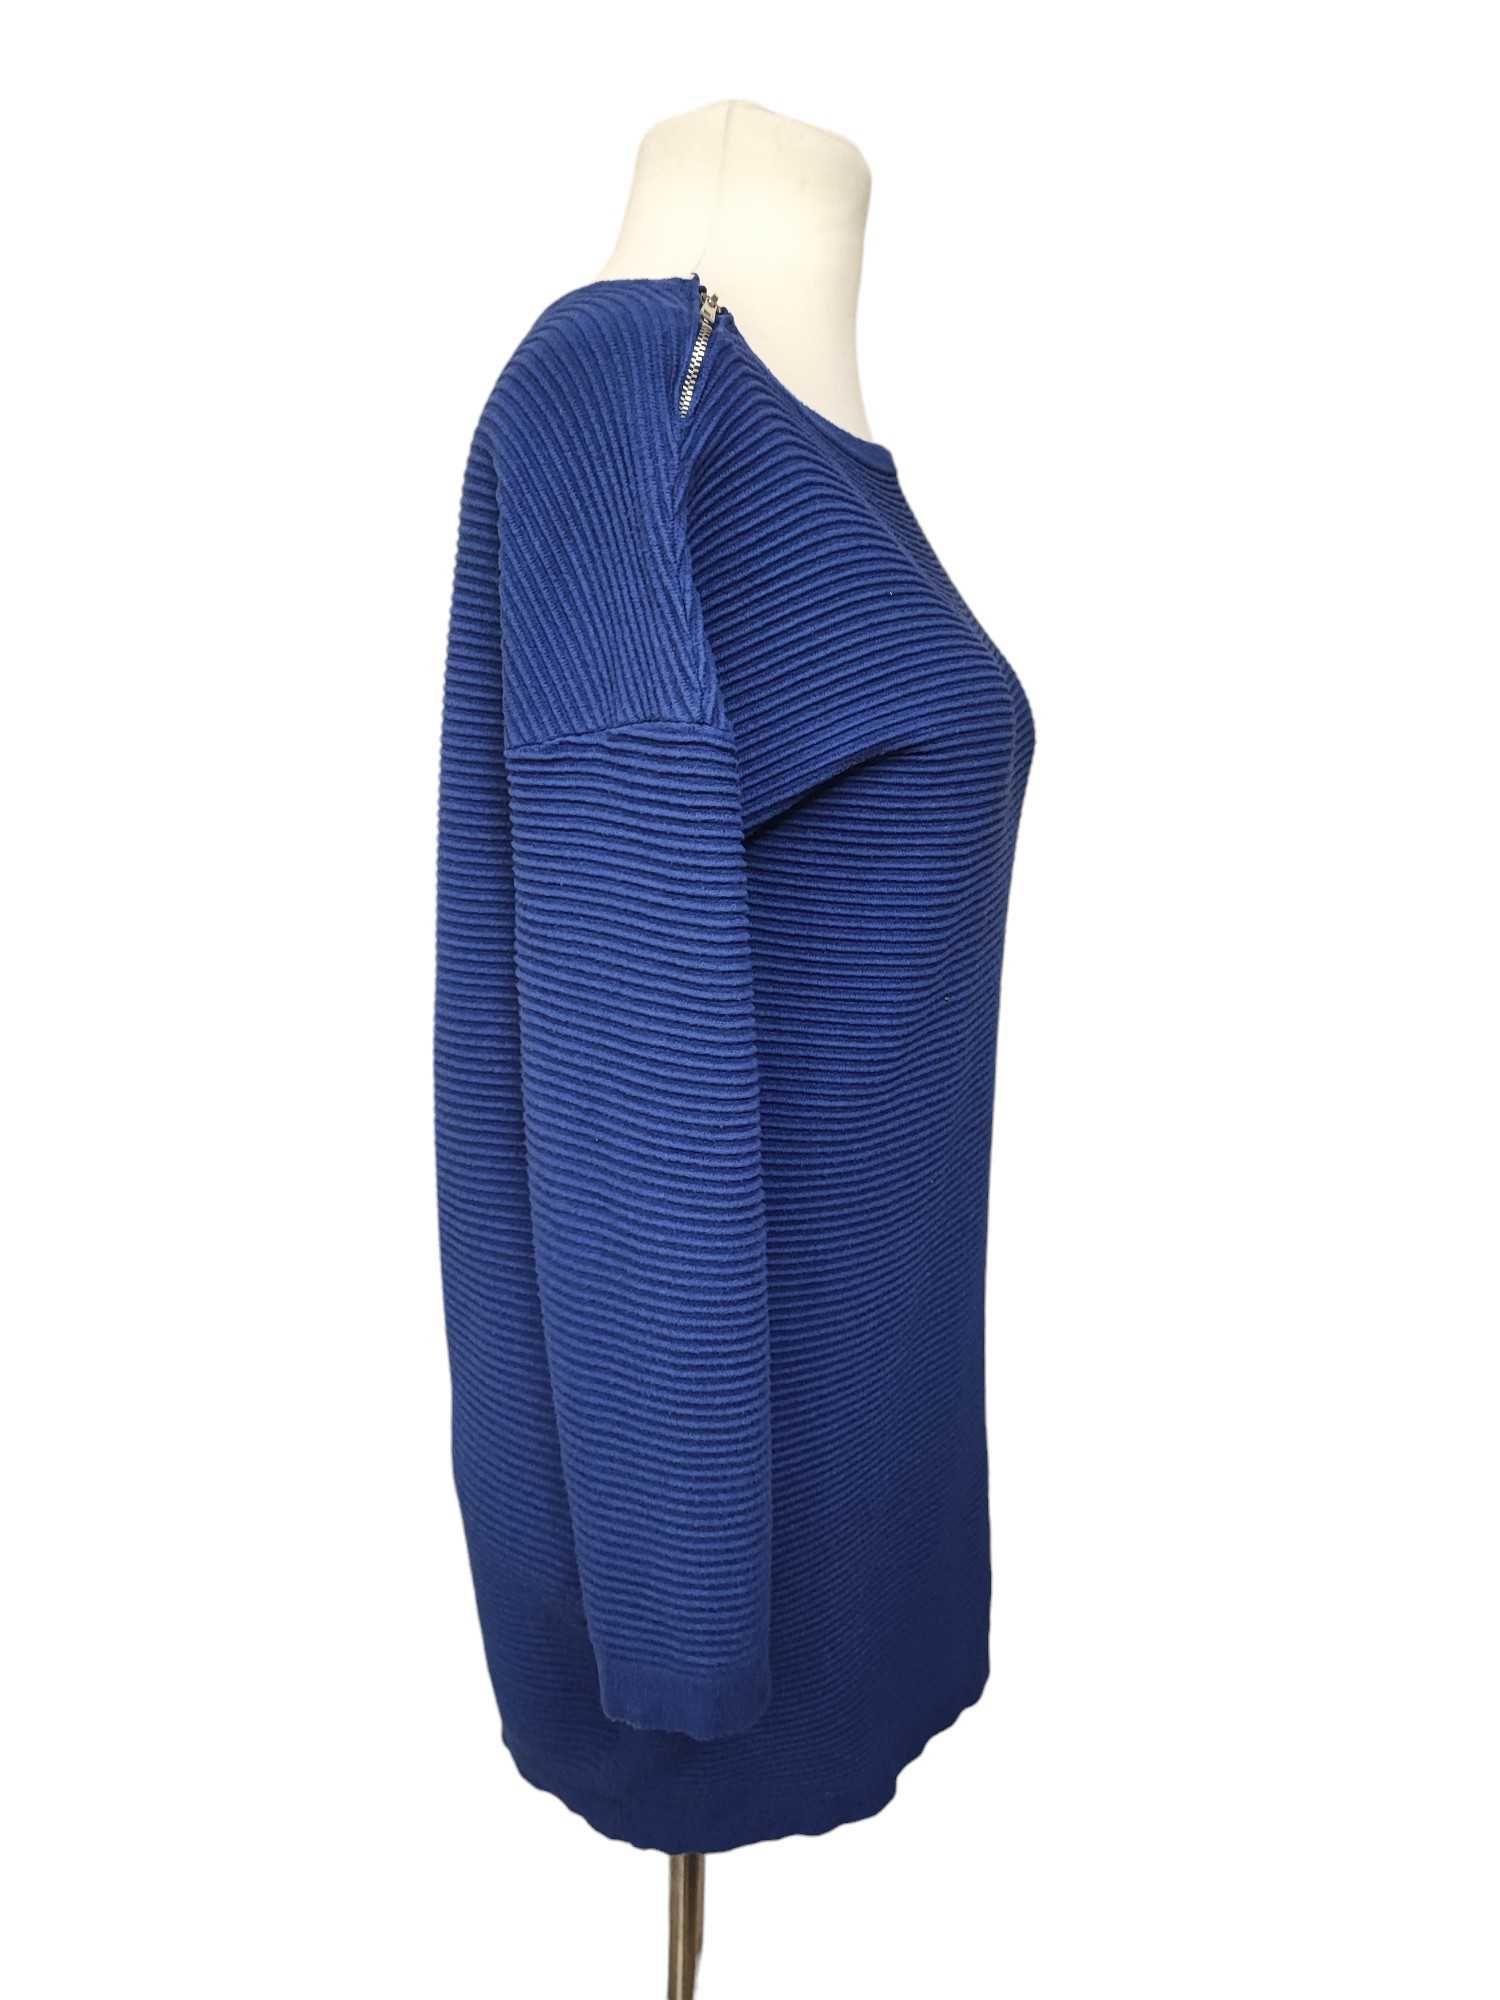 c8. MOHITO kobaltowa niebieska sukienka tunika 38 M